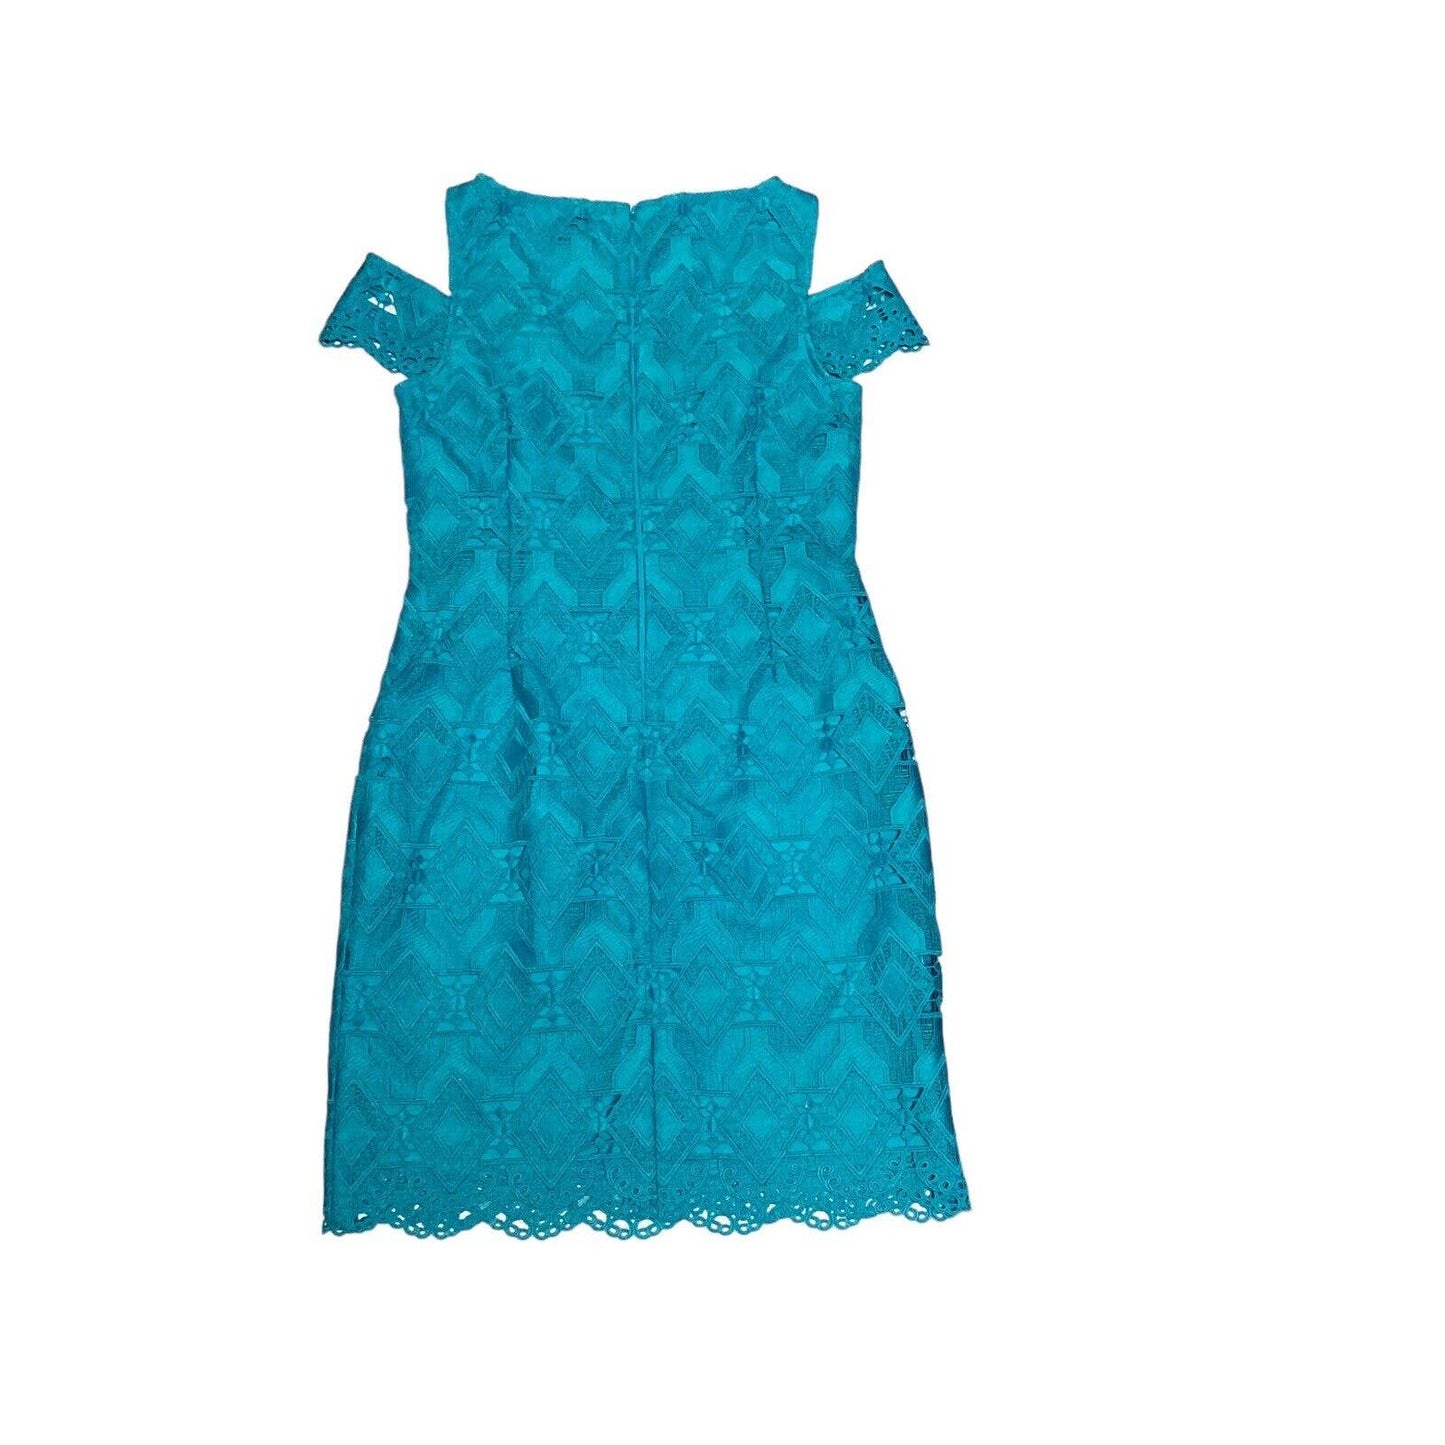 Tahari Arthur S Levine Turquoise Shift Lined Lace Dress Size 6